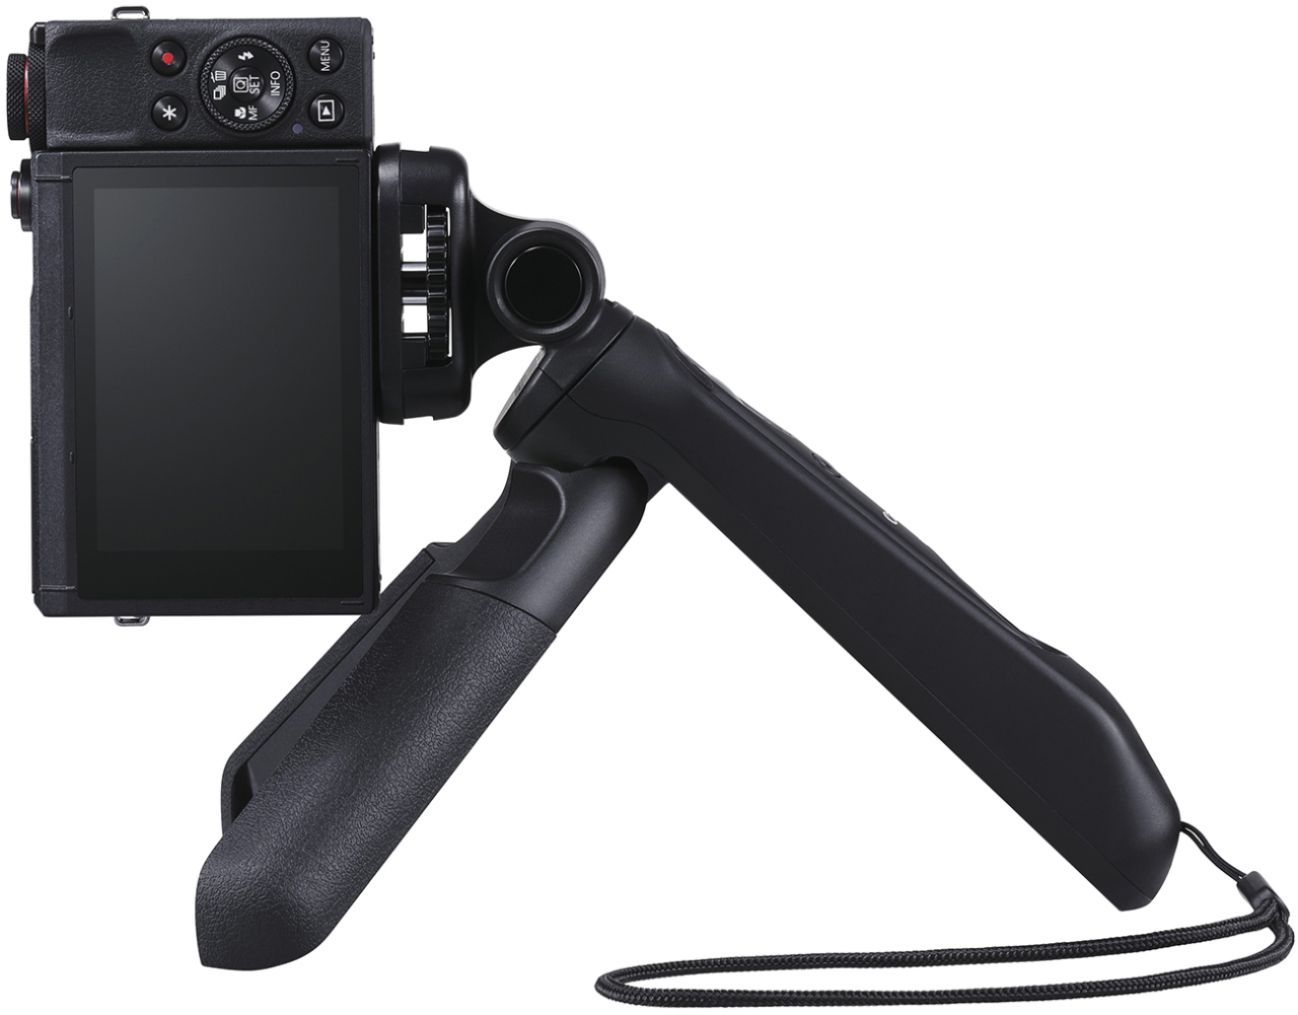 Canon PowerShot G7 X Mark III 20.1-Megapixel Digital Camera - Black -  Premium Deal-expo Accessories Bundle - (International Version) 